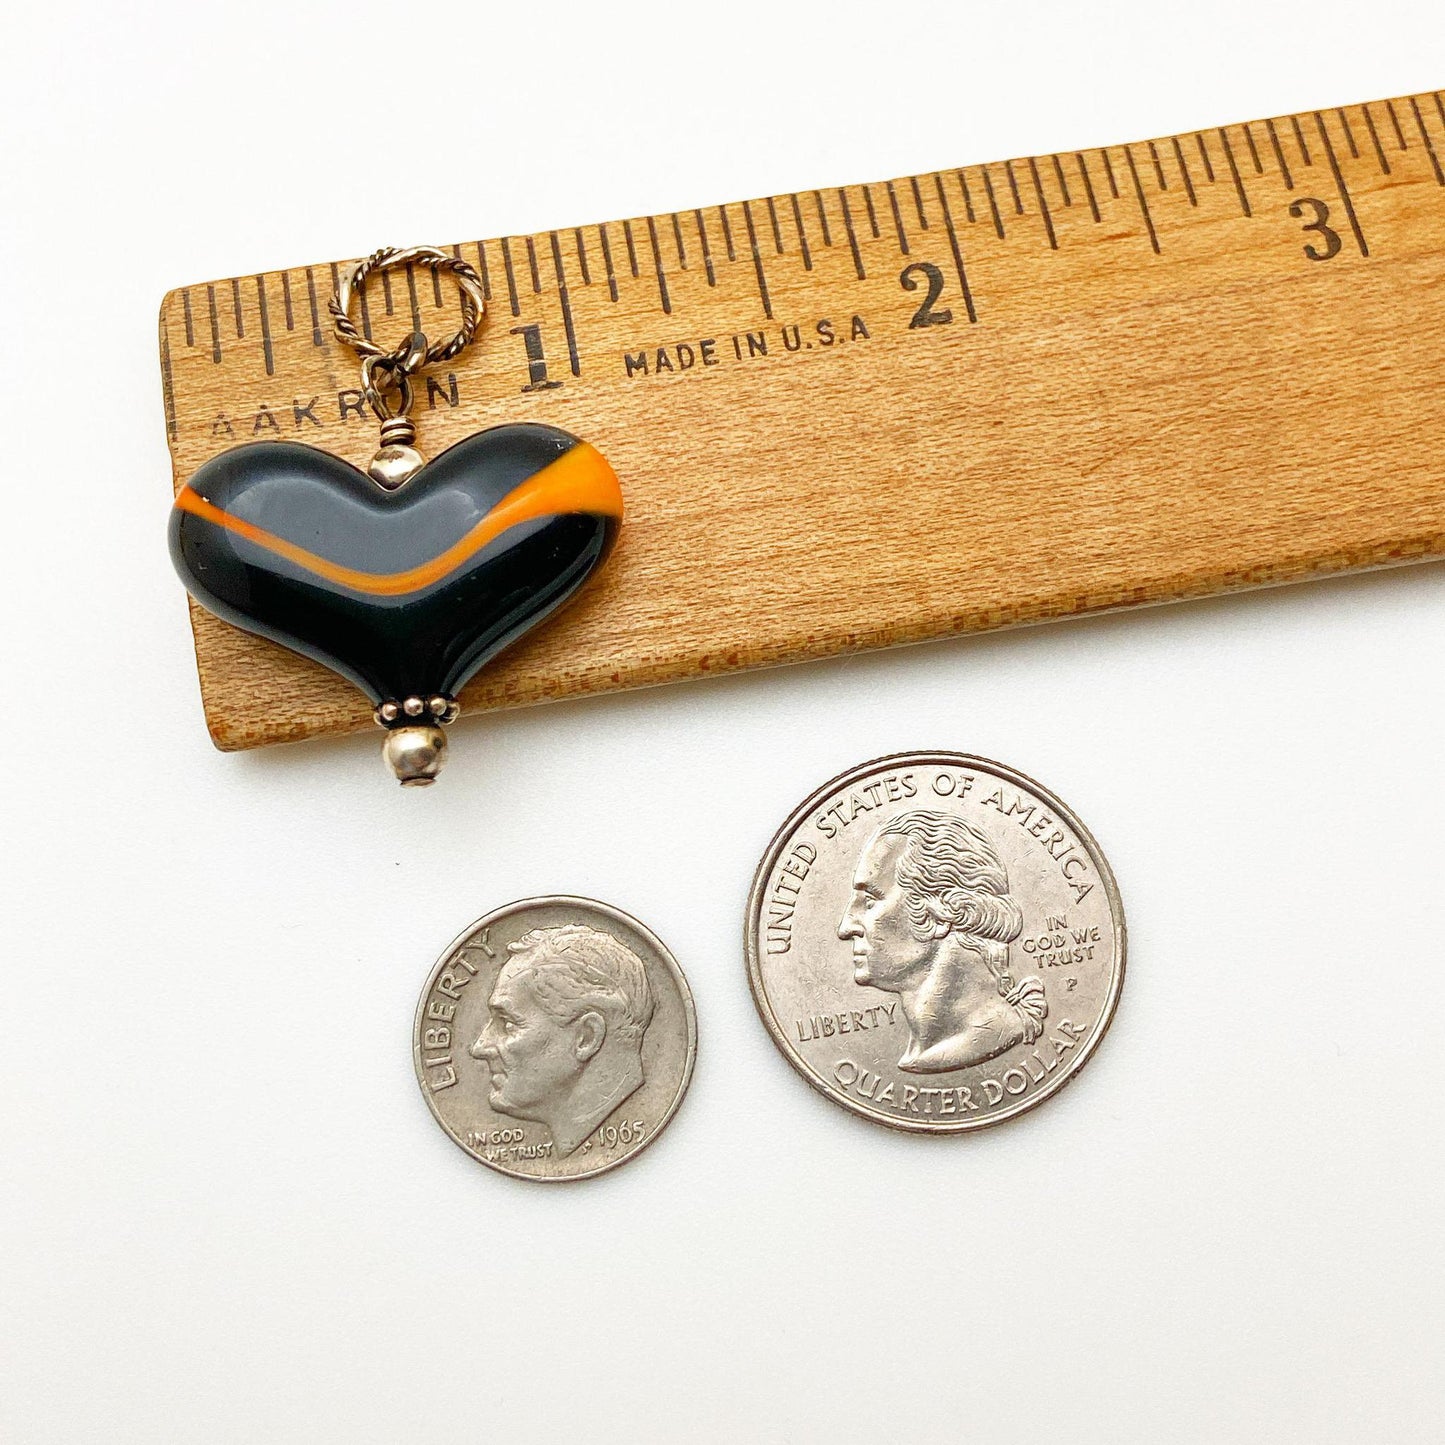 Pendant - Black Heart with Orange Band - Handmade Glass